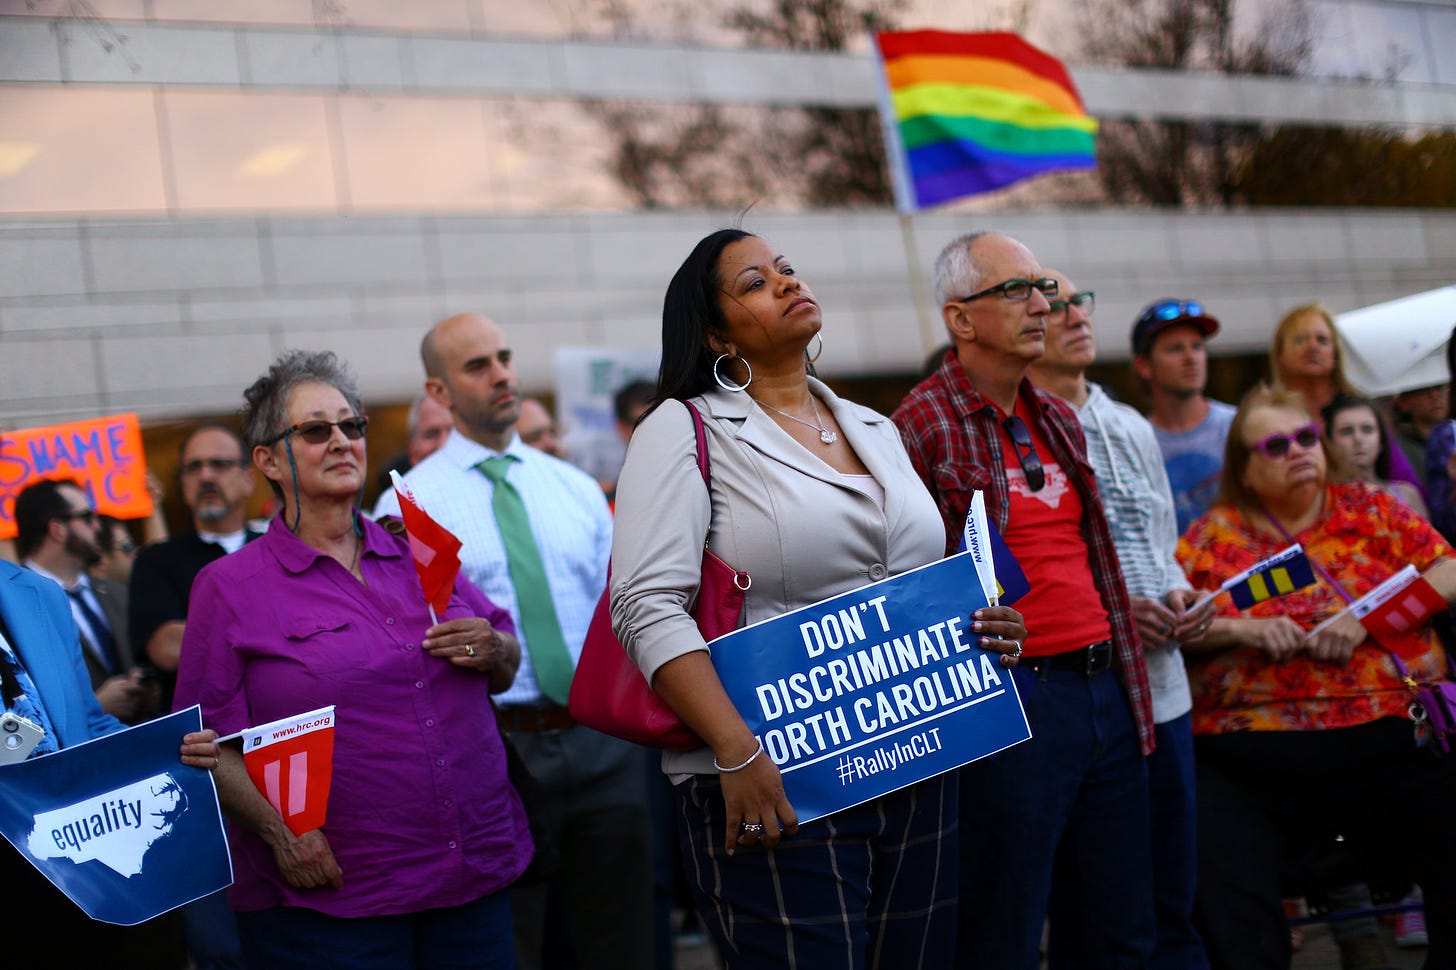 North Carolina Gay Bias Law Draws a Sharp Backlash - The New York Times